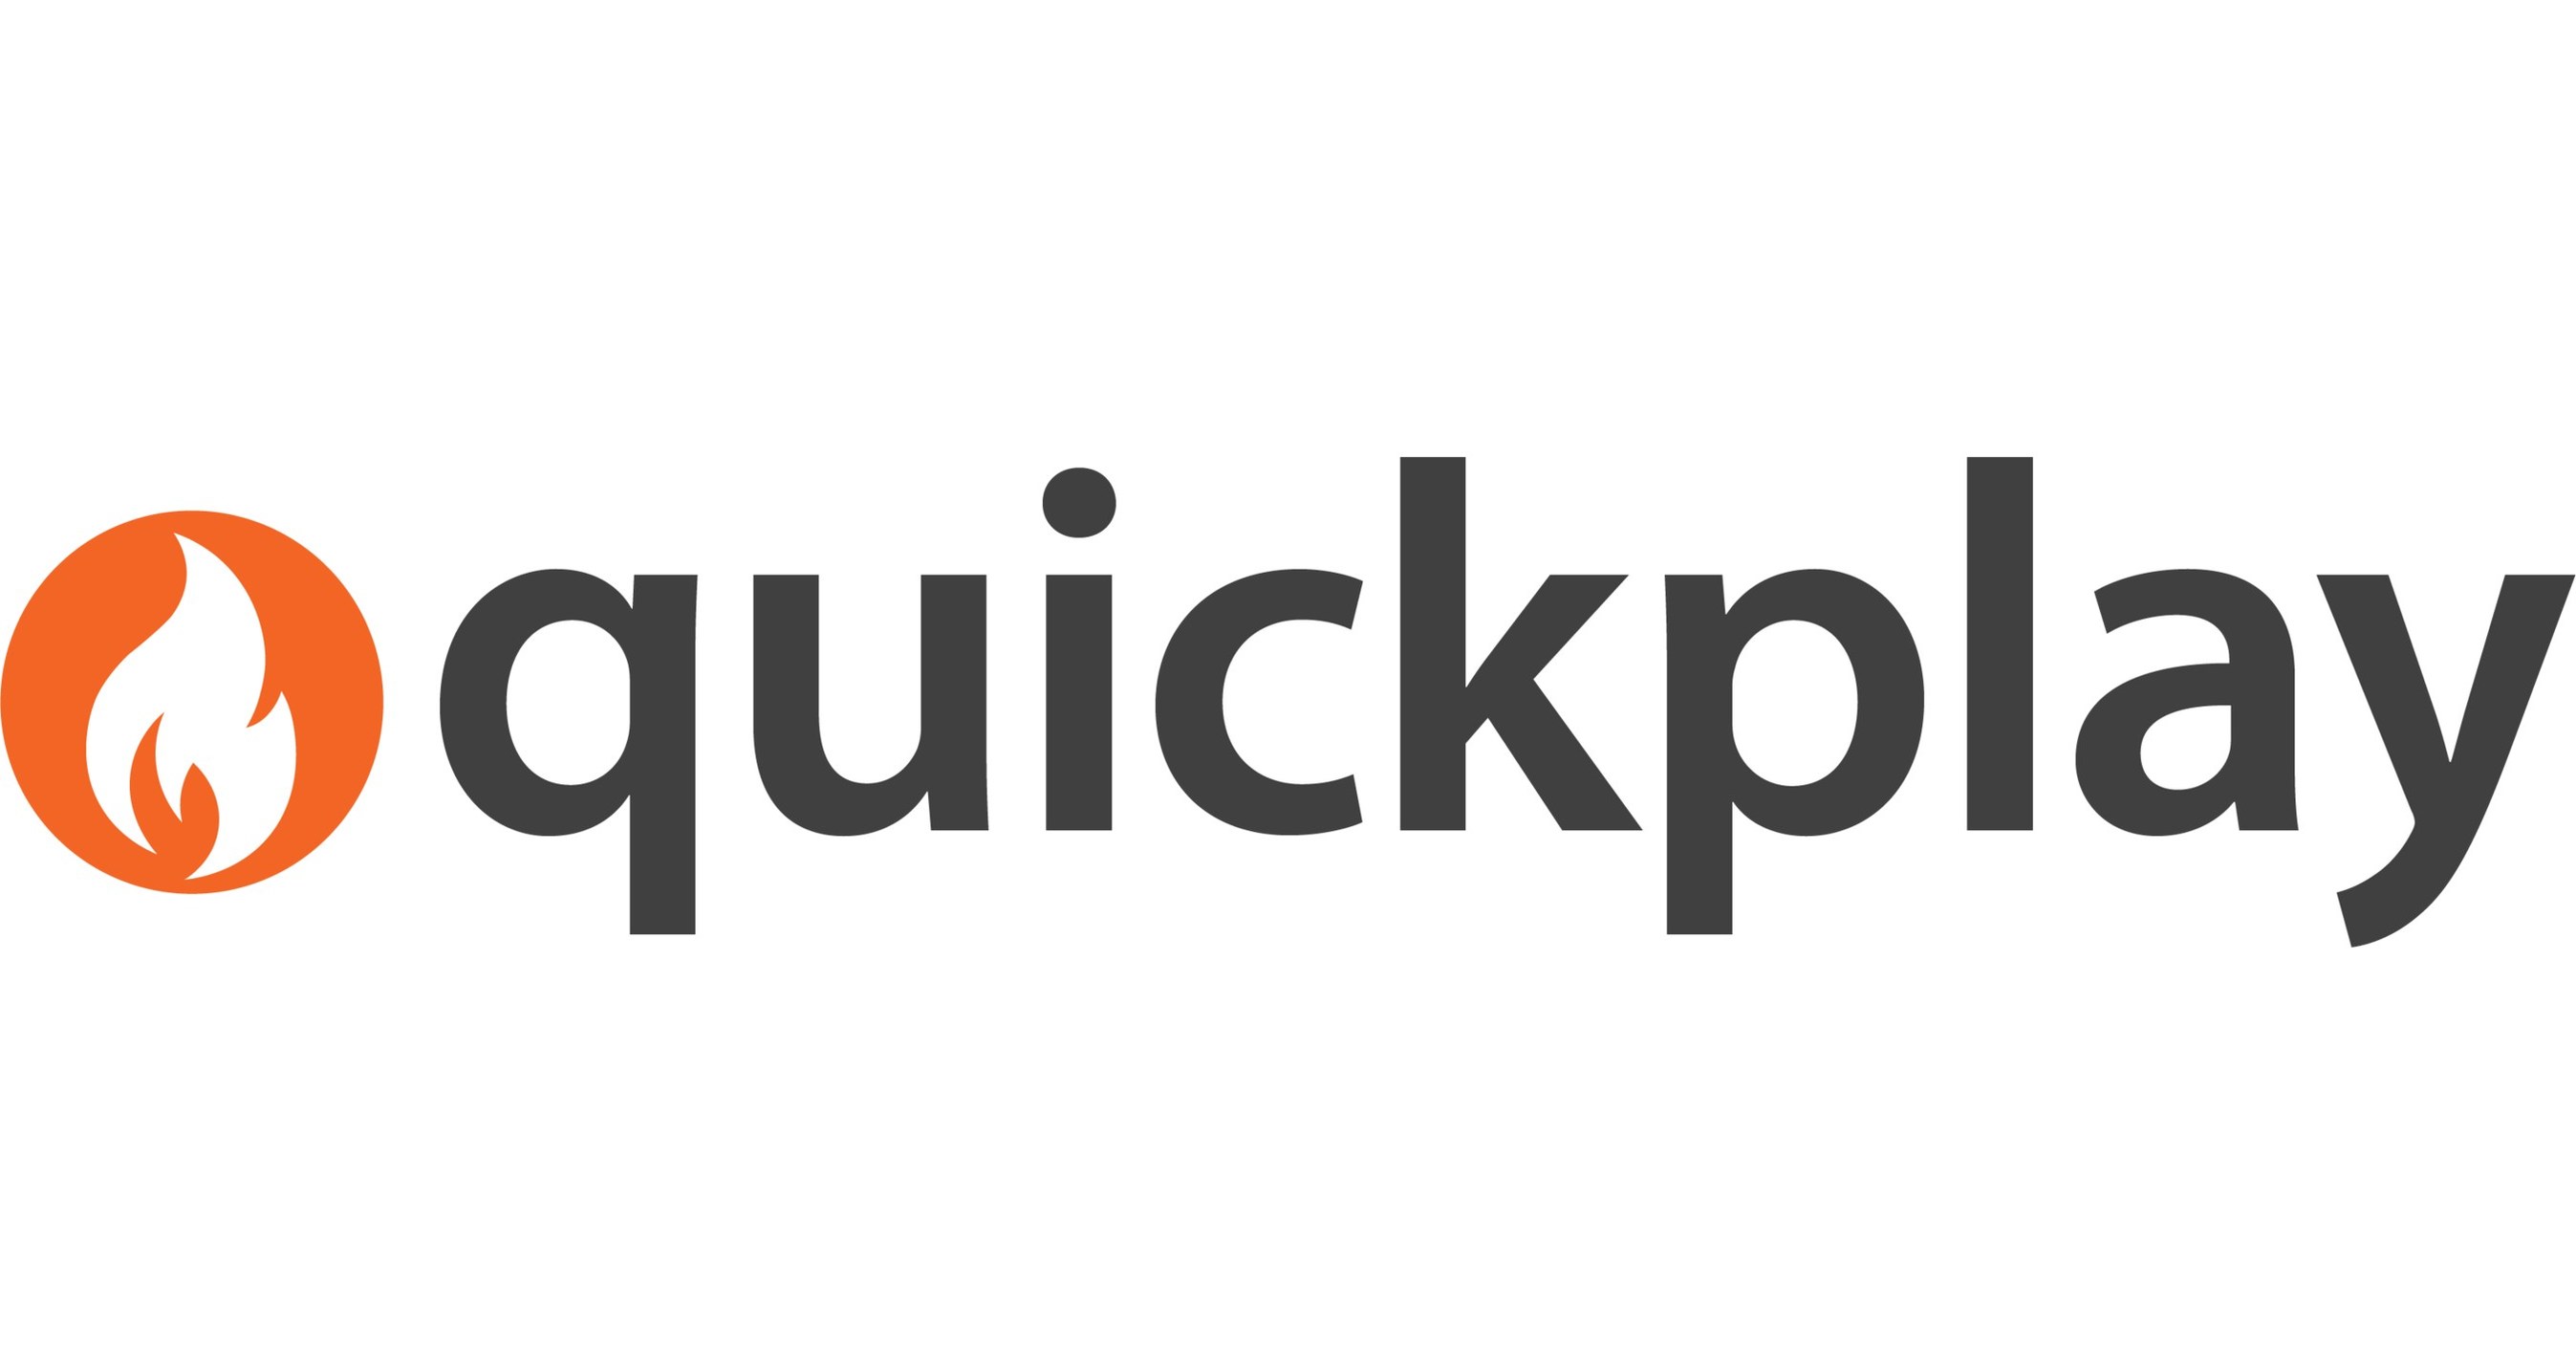 quickplay logo